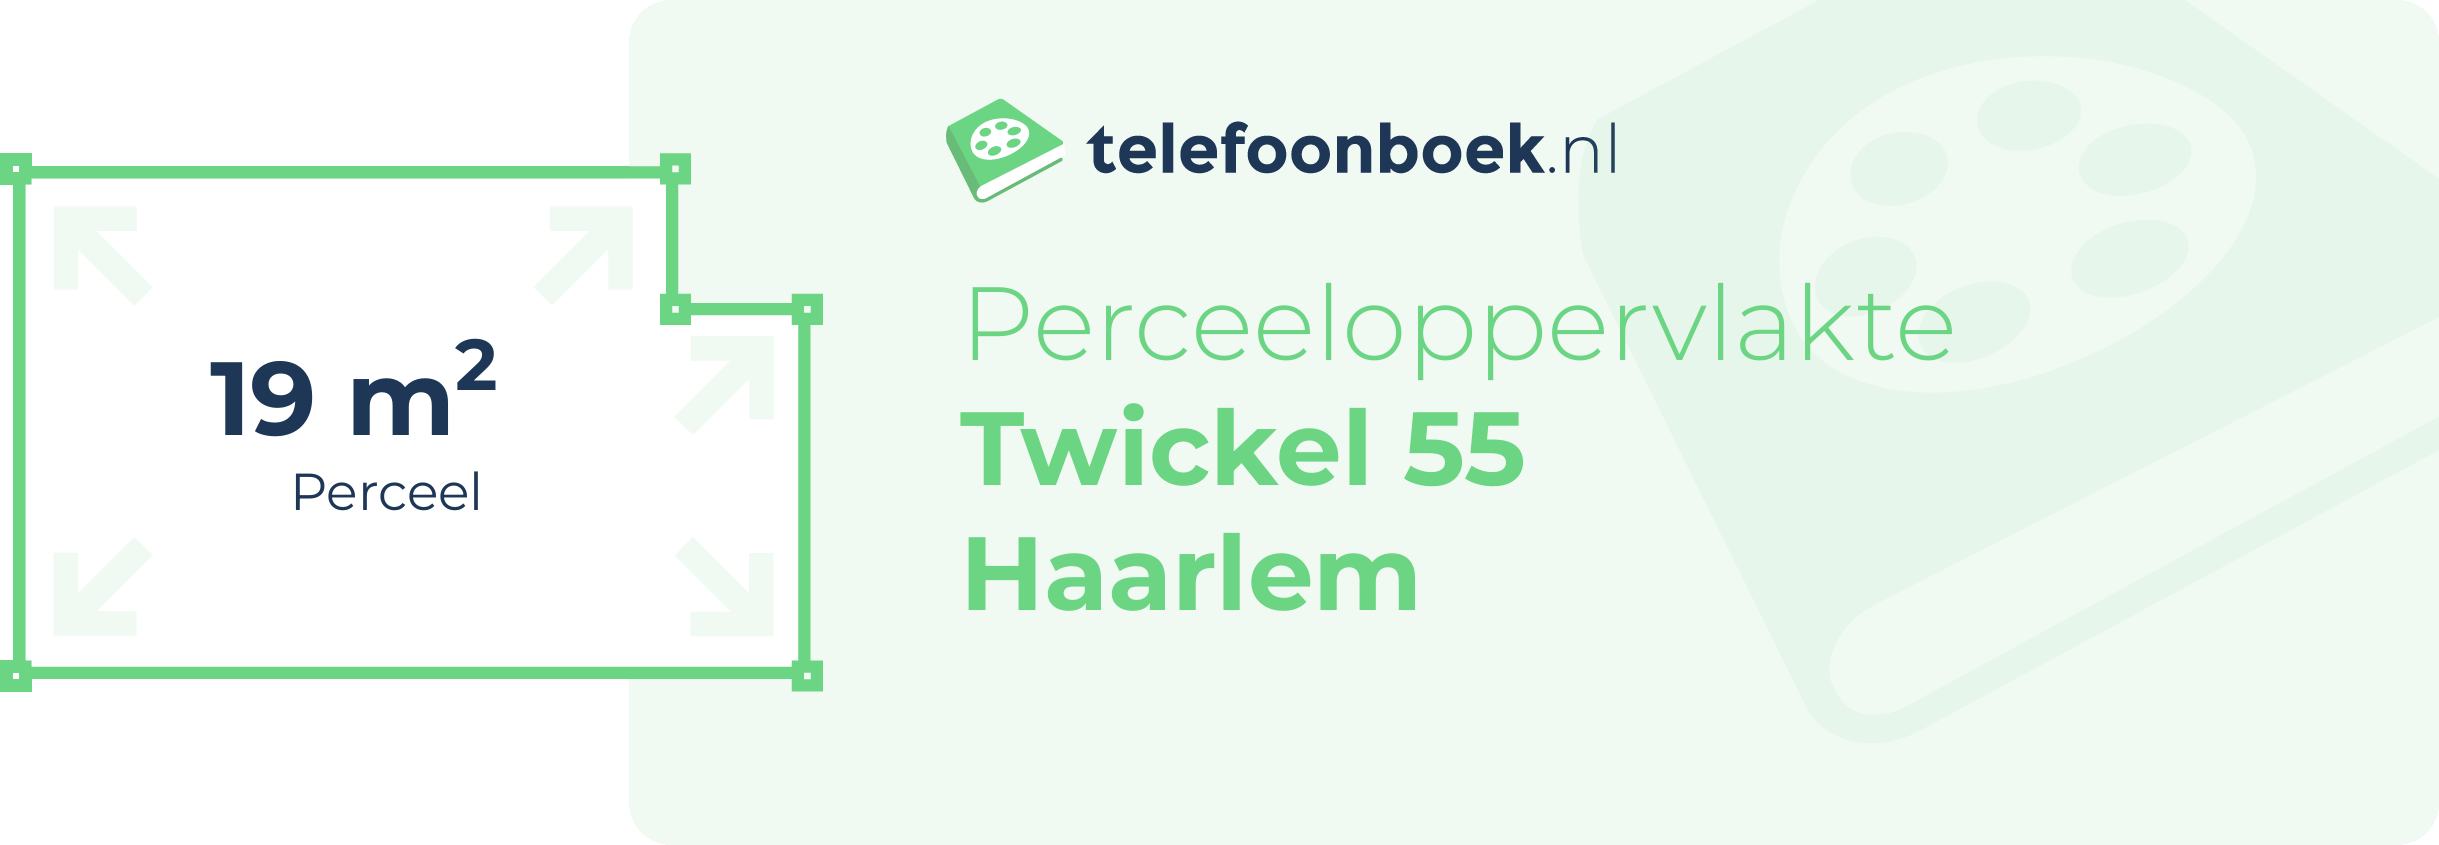 Perceeloppervlakte Twickel 55 Haarlem